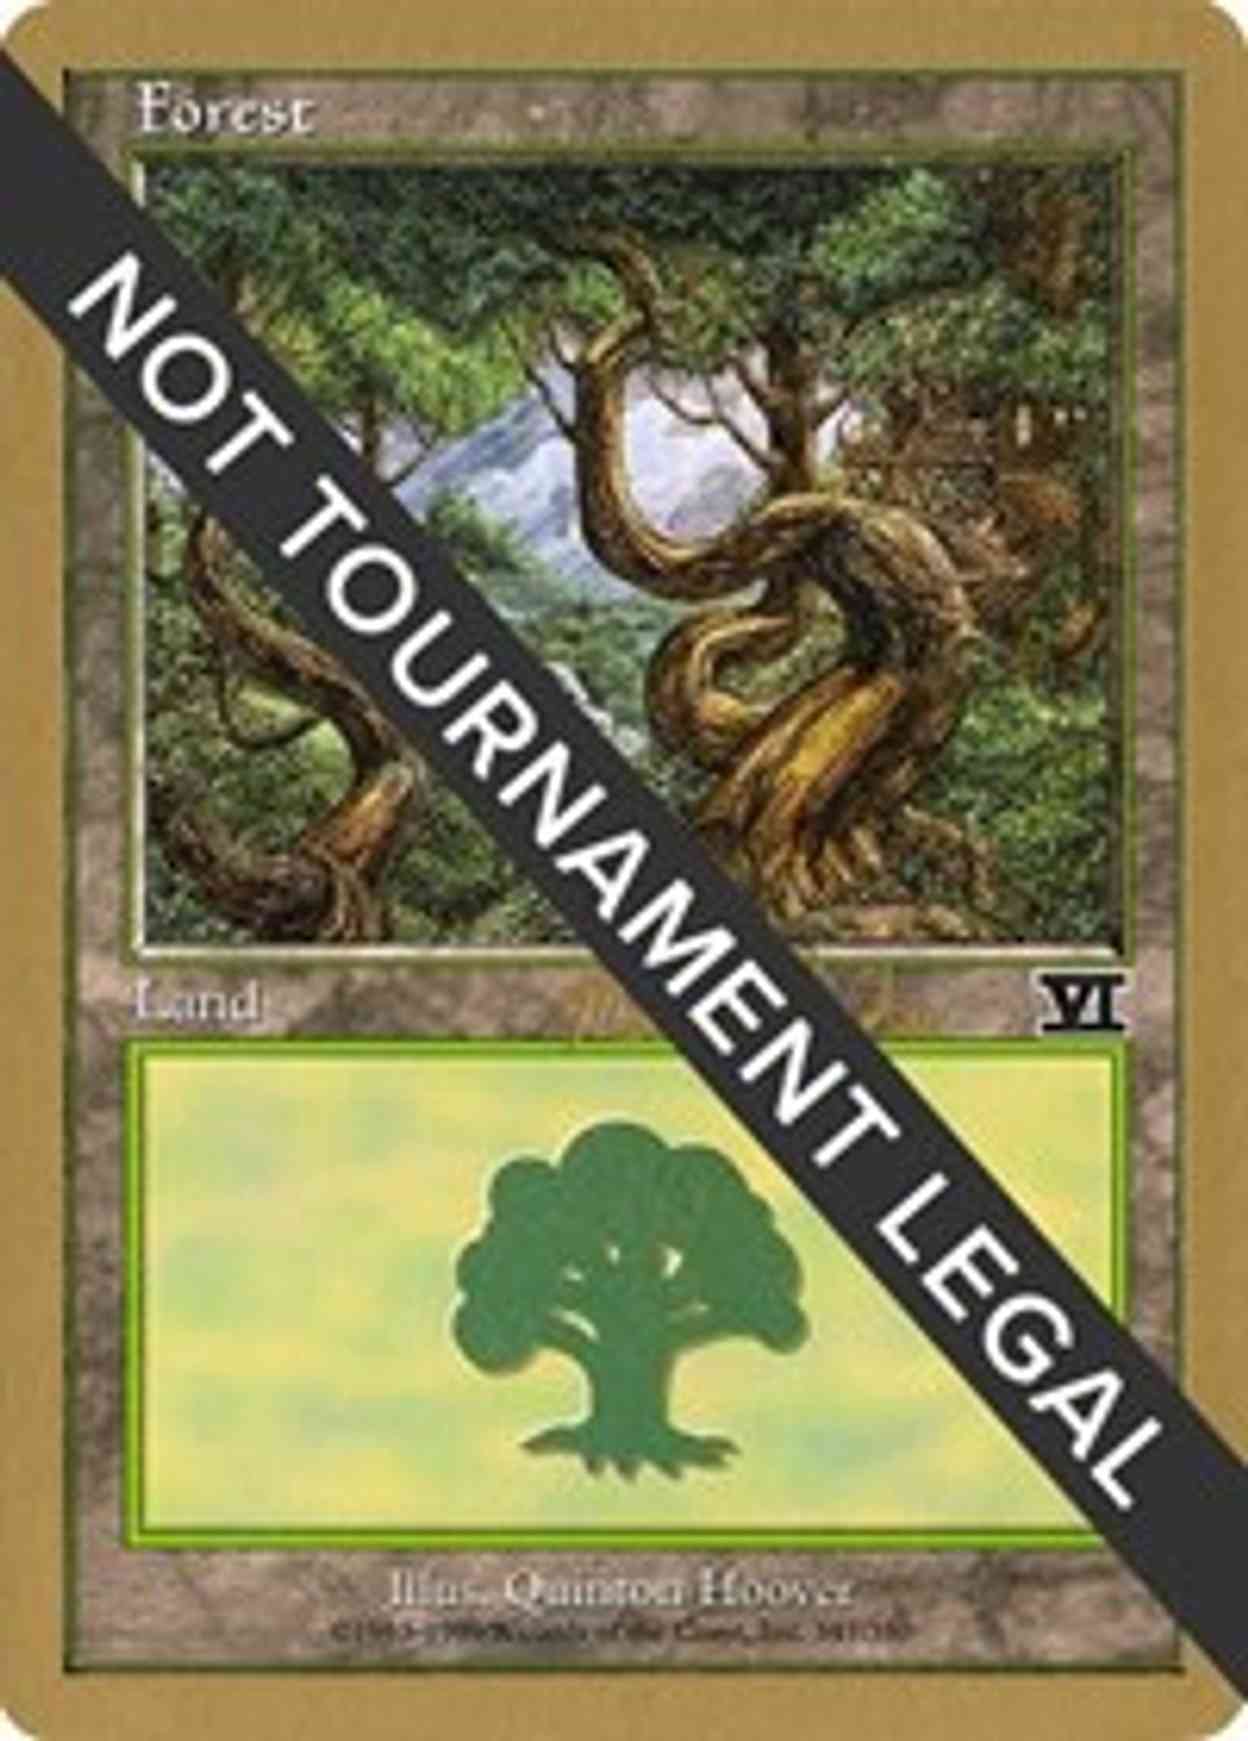 Forest (347) - 1999 Matt Linde (6ED) magic card front